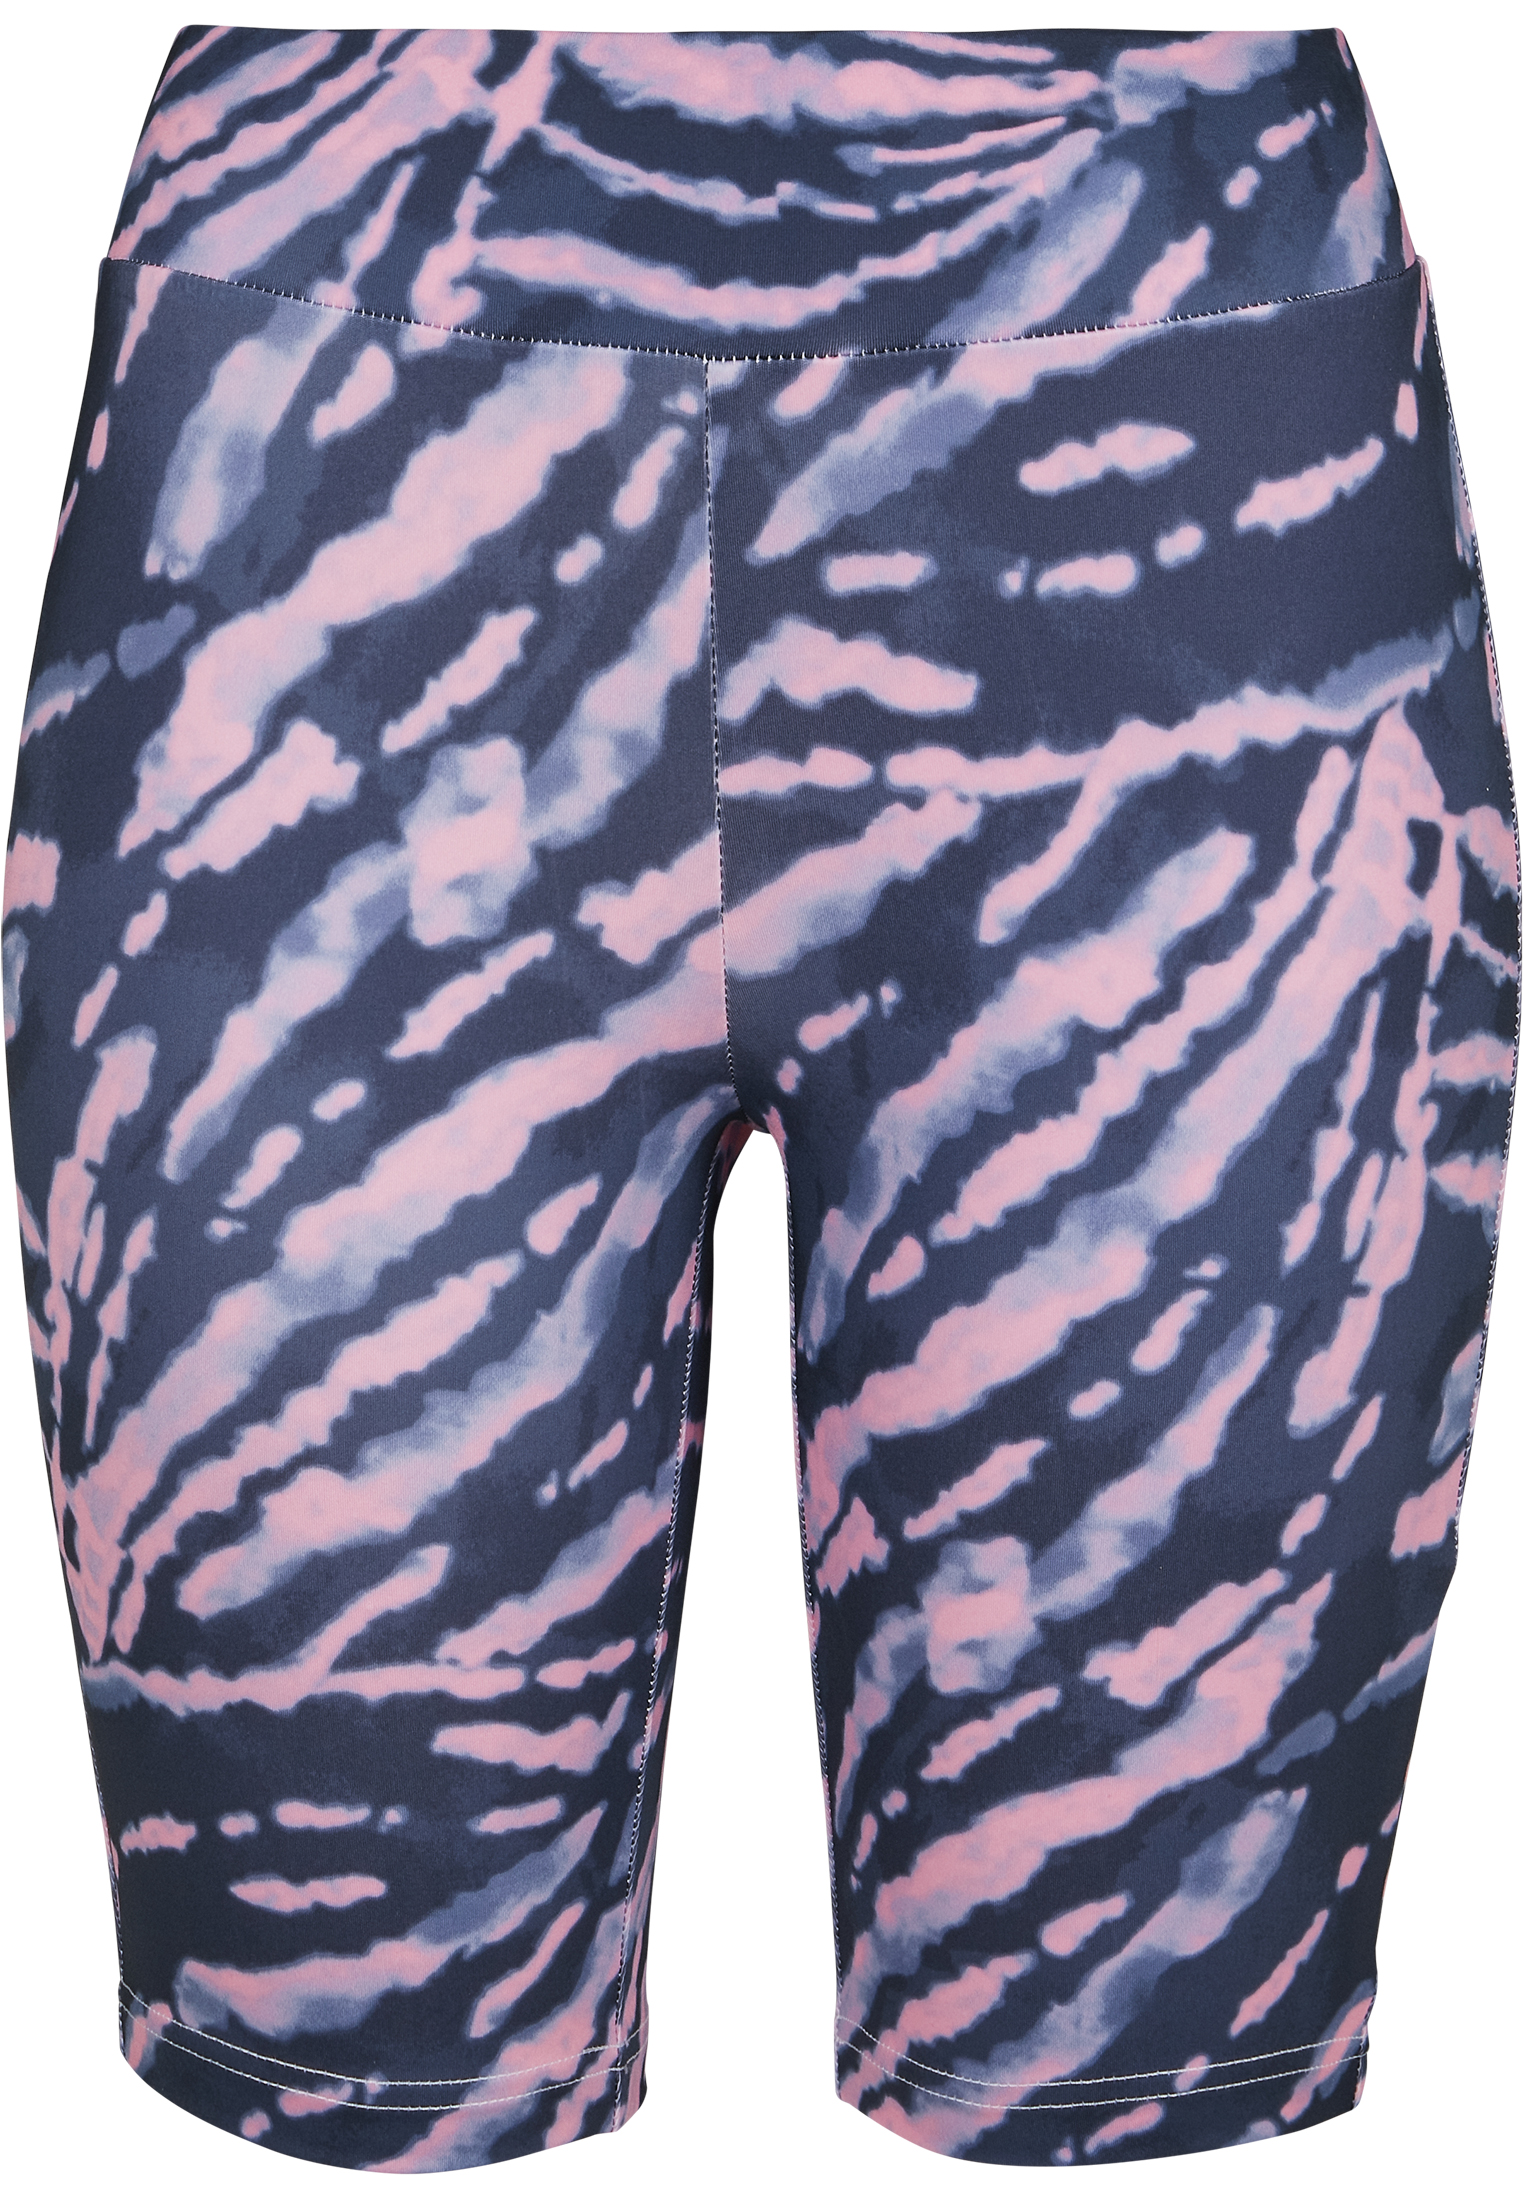 Curvy Ladies Tie Dye Cycling Shorts in Farbe darkshadow/pink